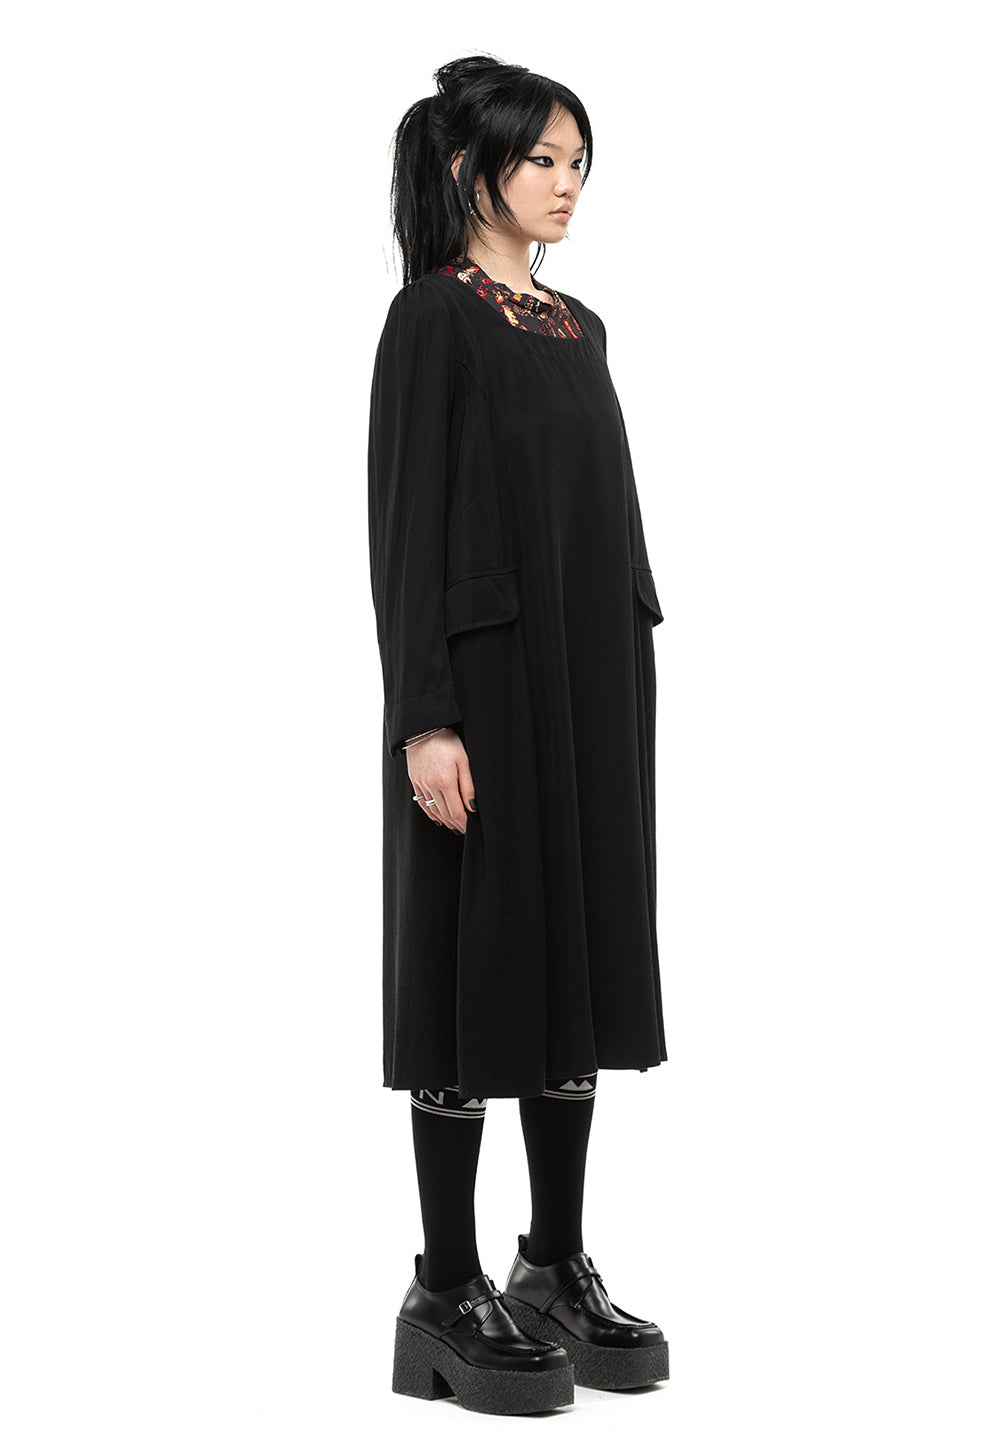 Hildegard Dress - Black sold by Angel Divine